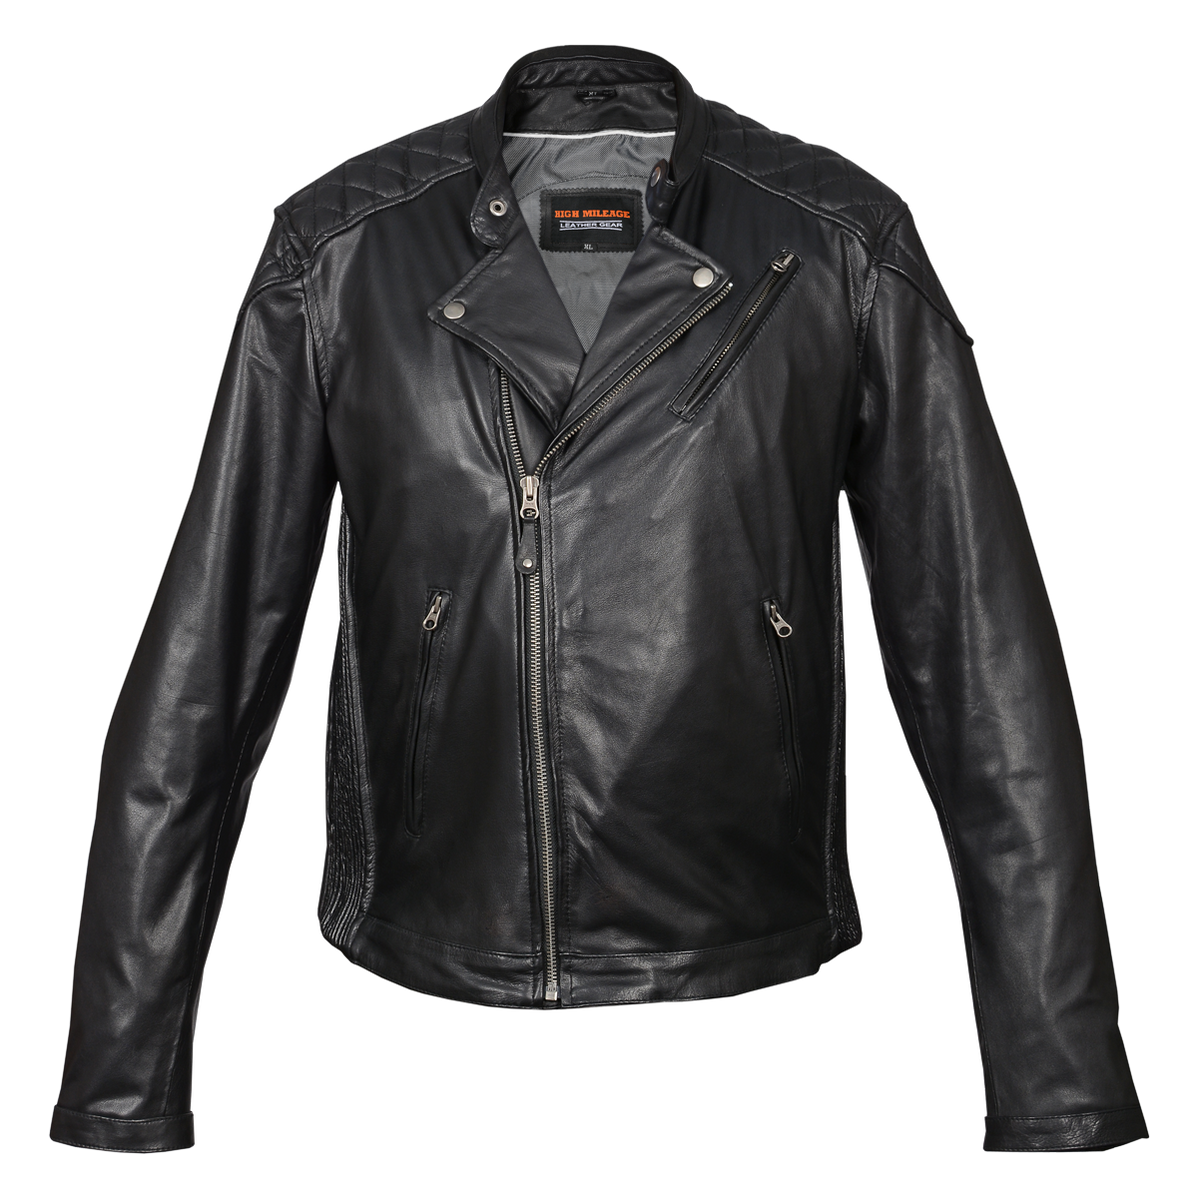 Jacket Leather Back Background PNG Image